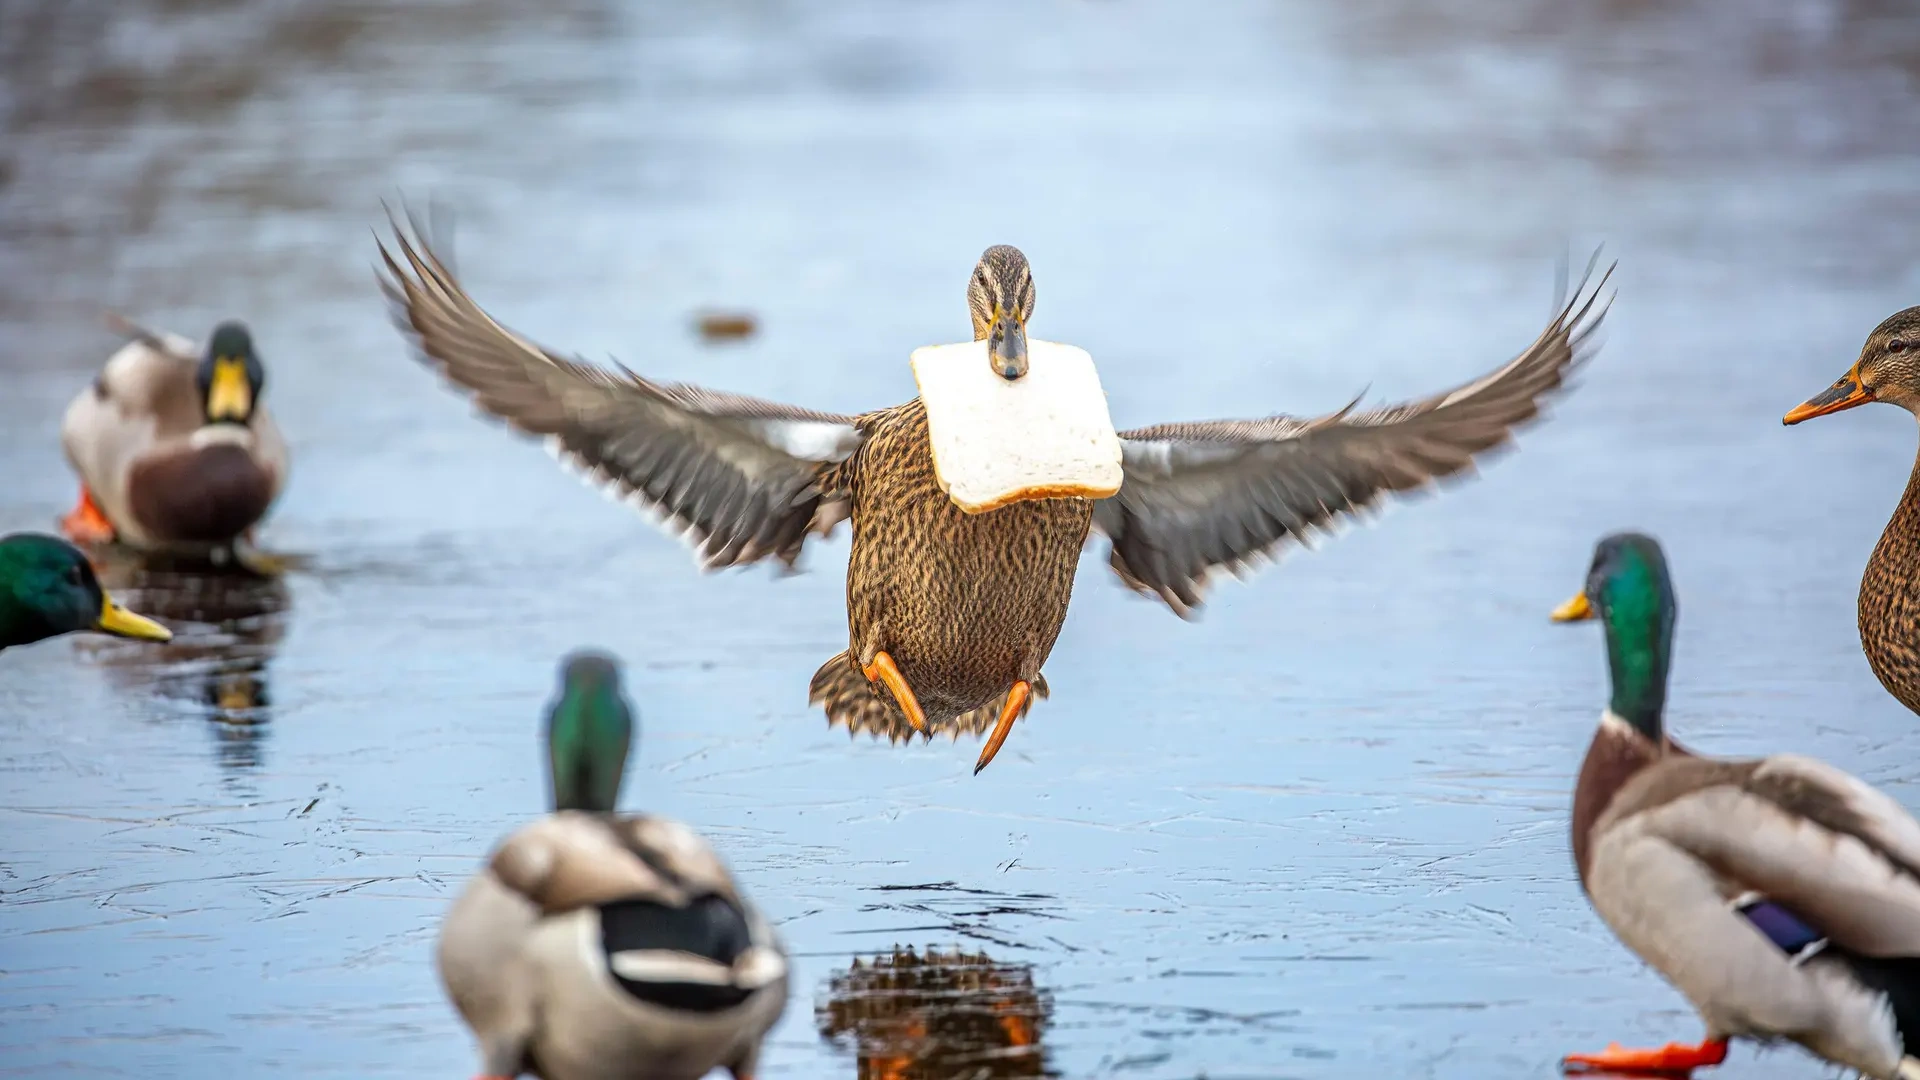 General 1920x1080 animals nature wildlife duck birds closeup bread beak food water wings landing reflection